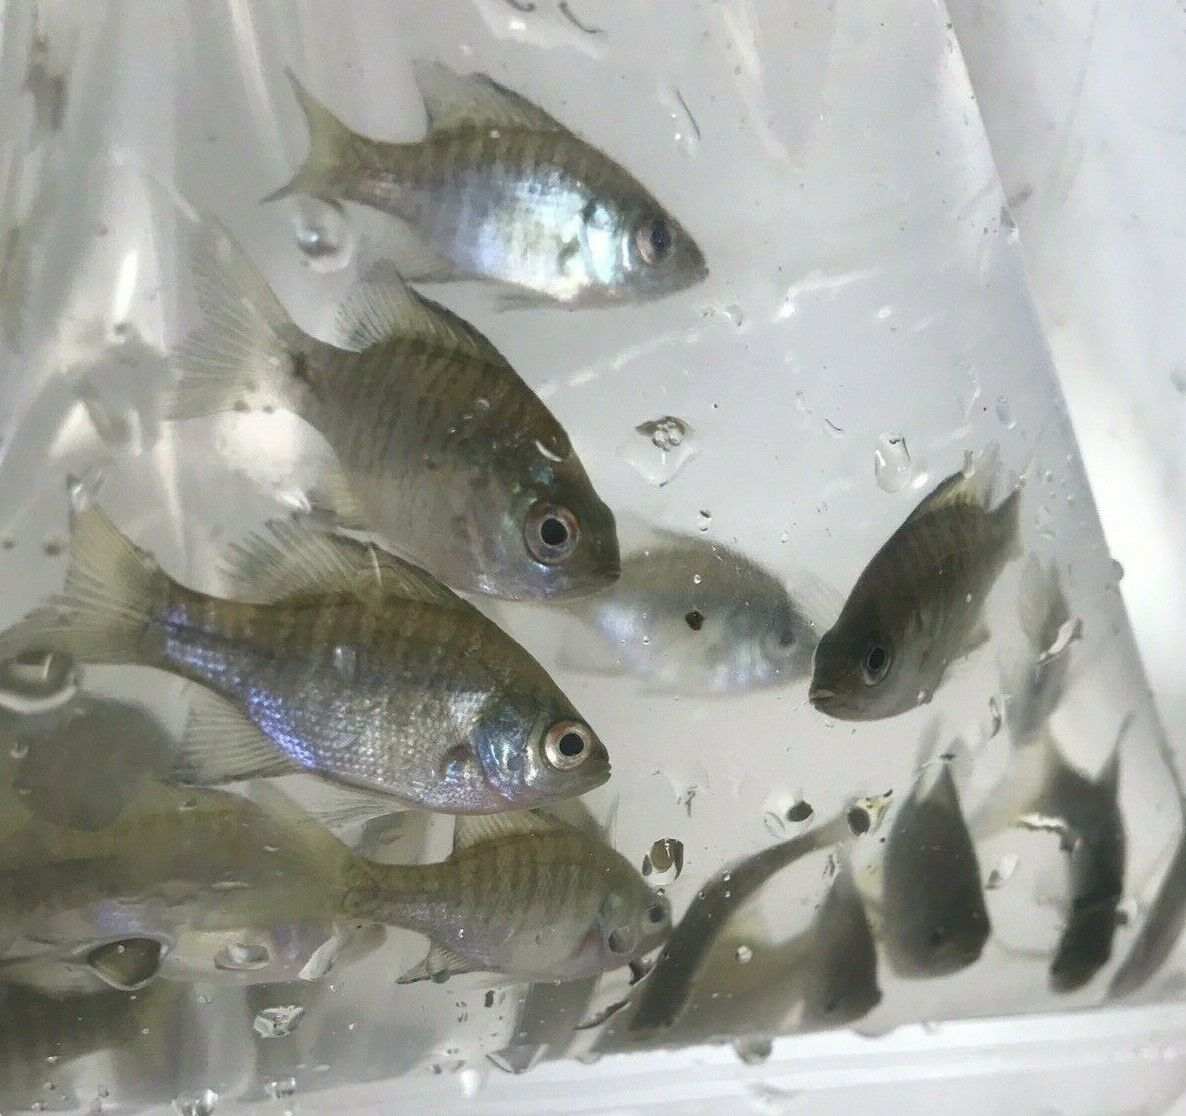 30+ Live Bluegill Fish (small) Guarantee Alive (2-day Shipping)